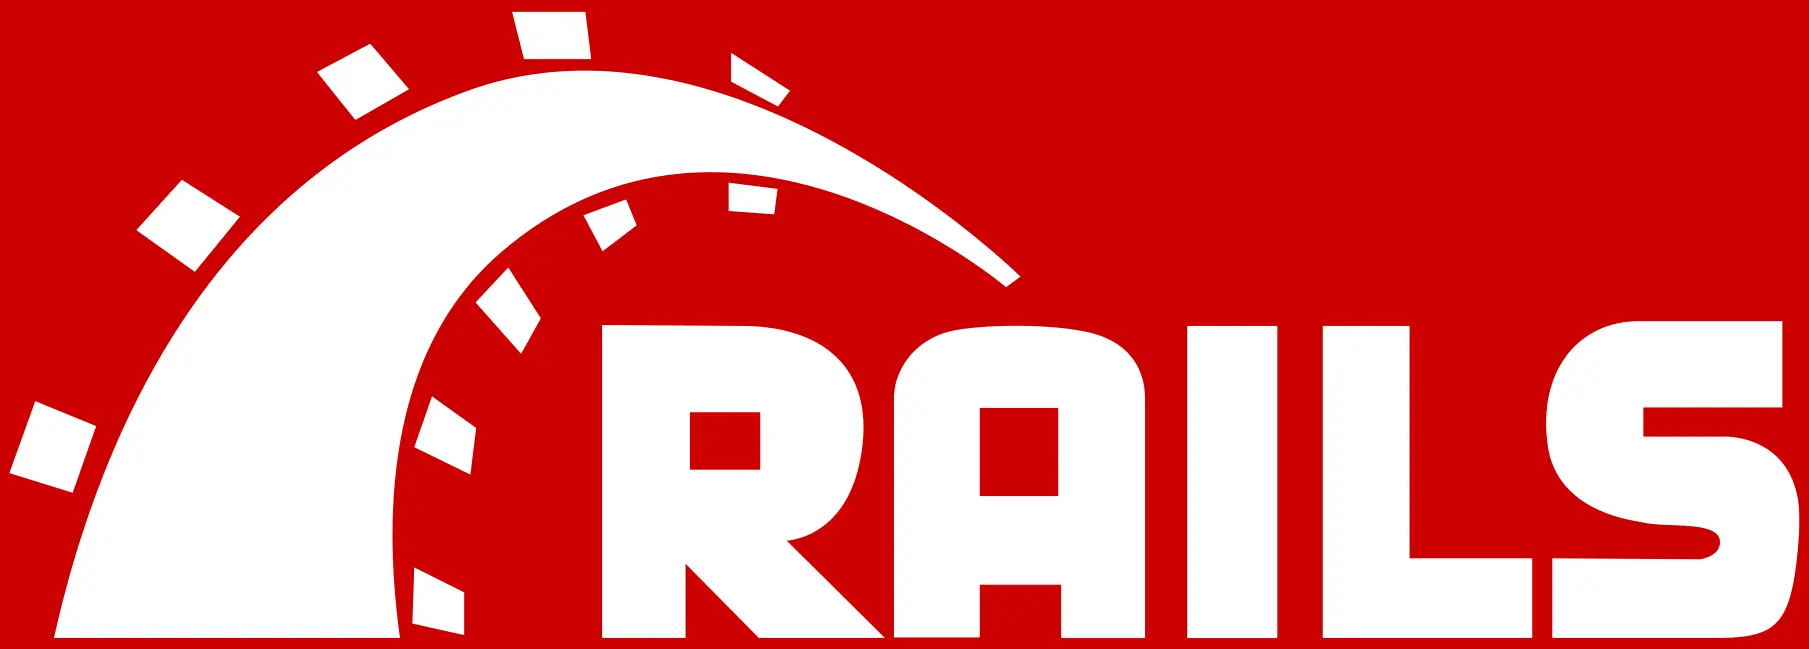 Ruby on Rails framework official logo